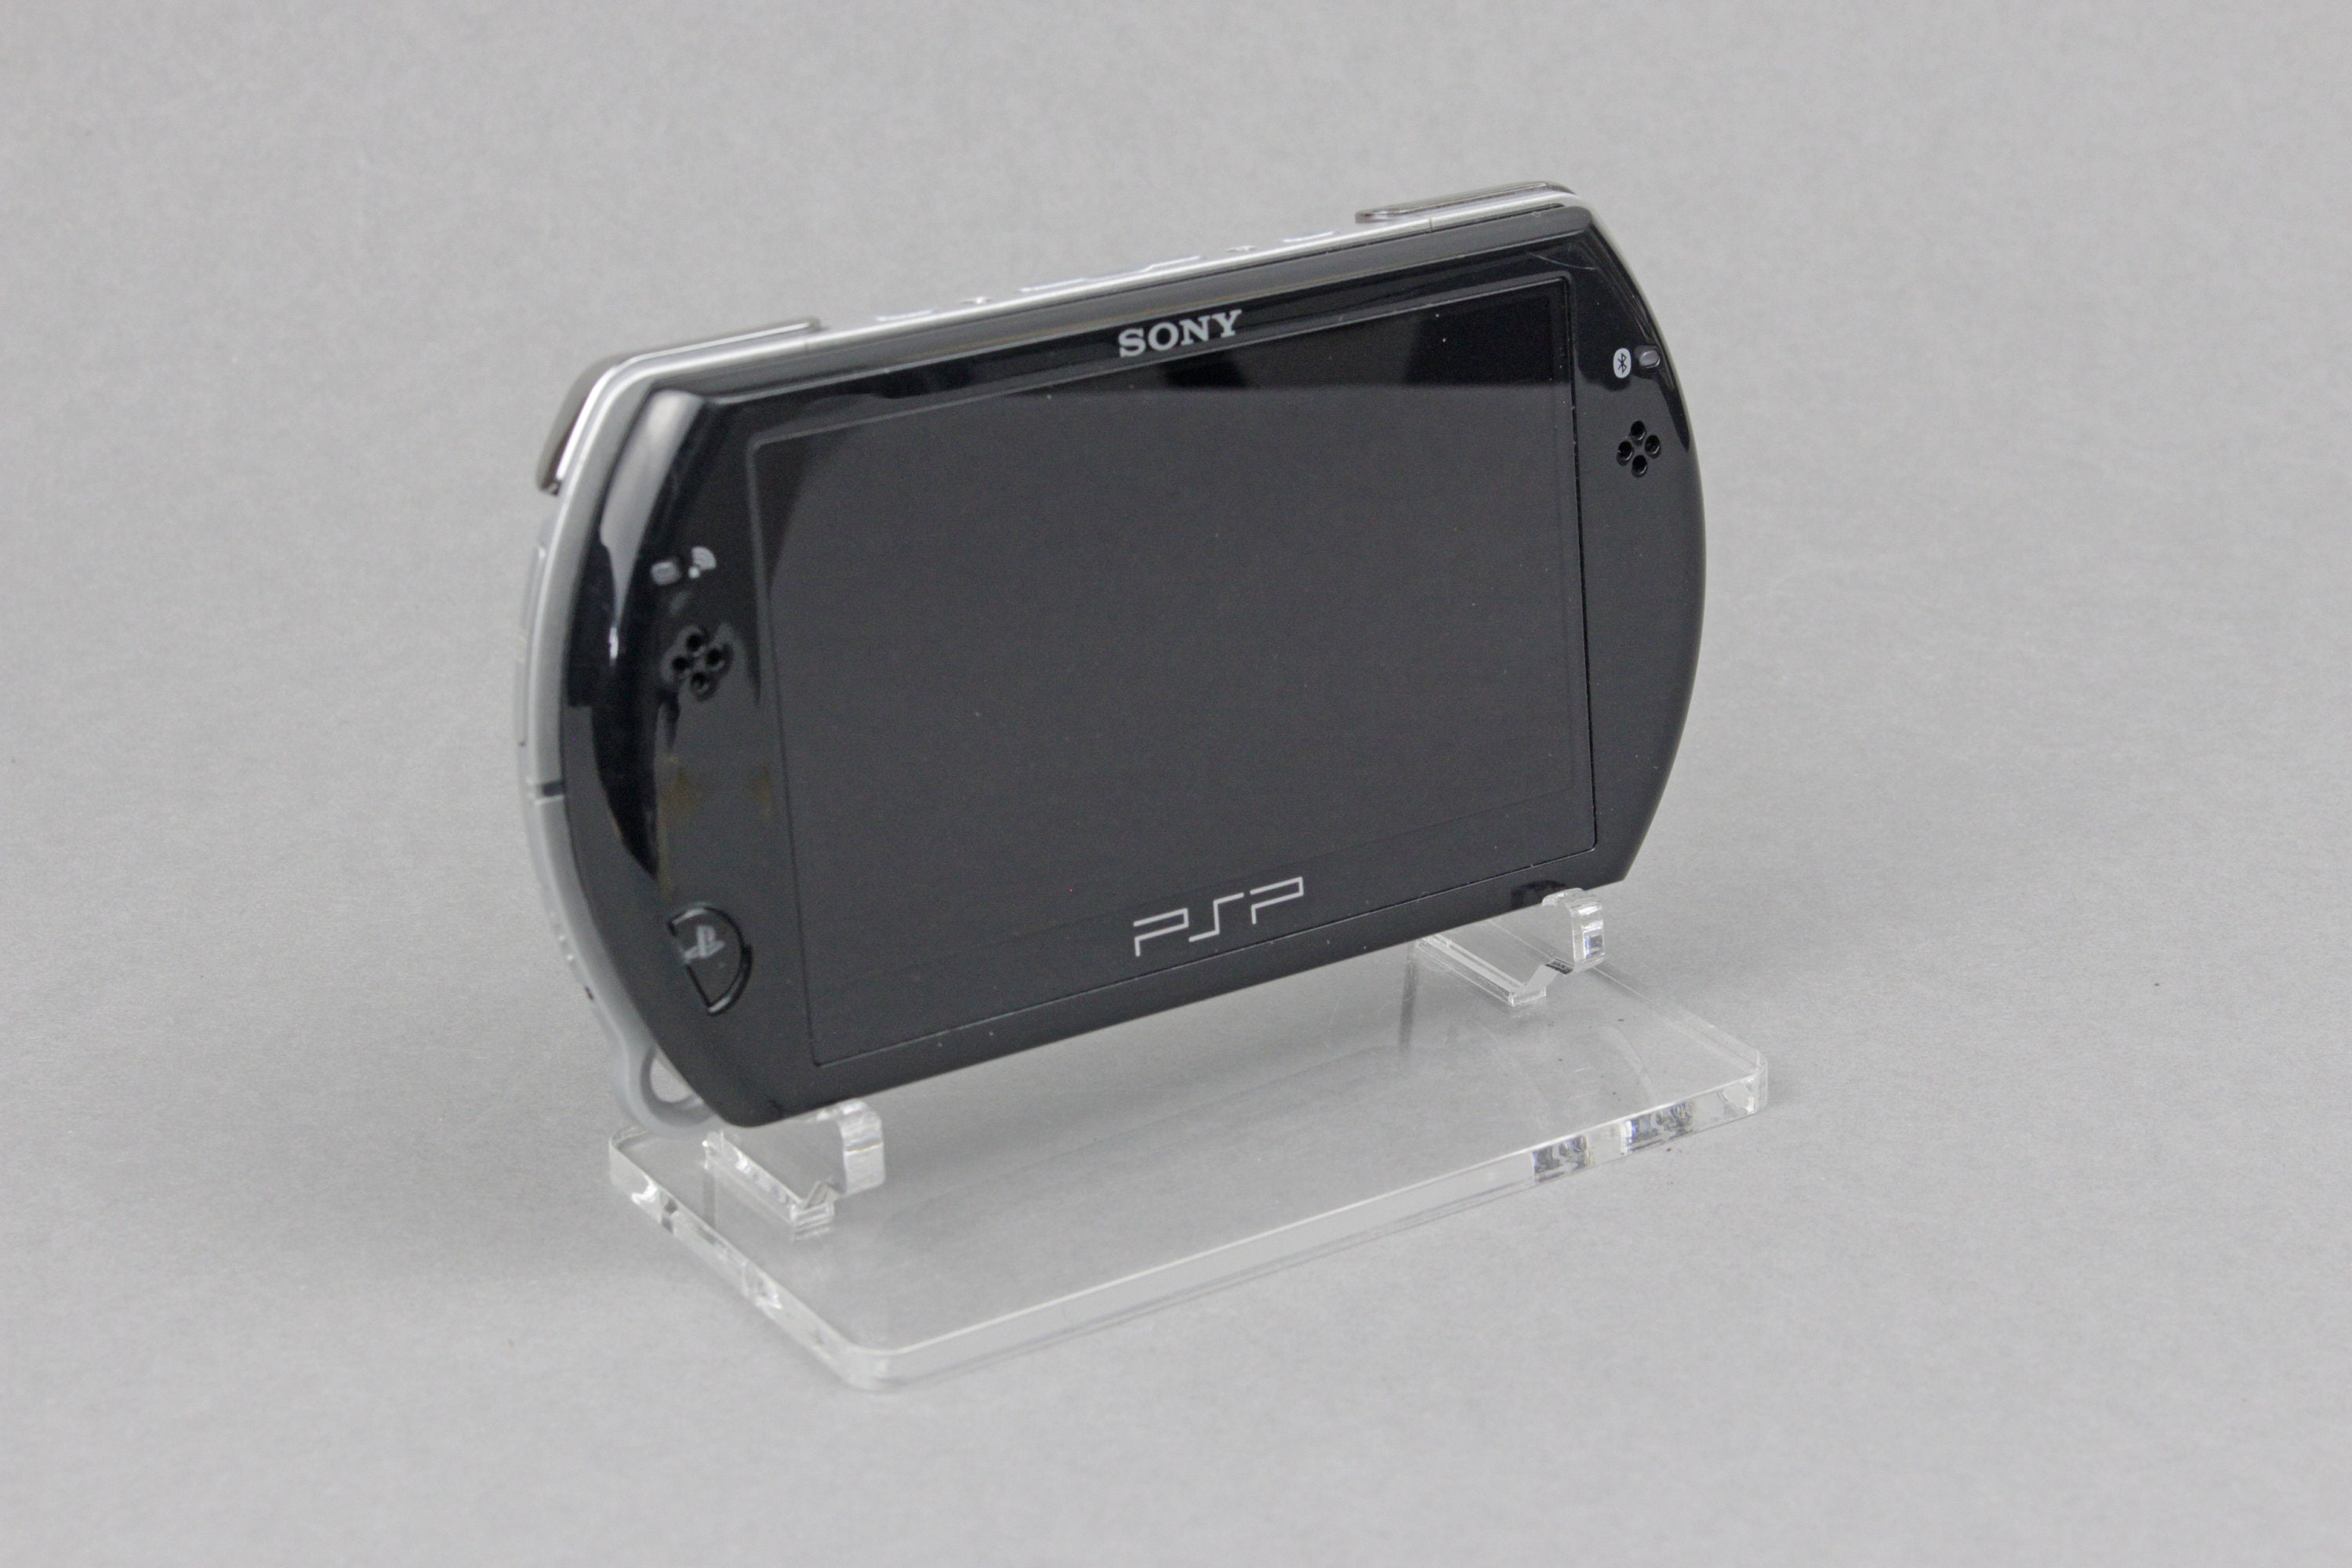 Sony PSP Go Display Stand - Etsy 日本